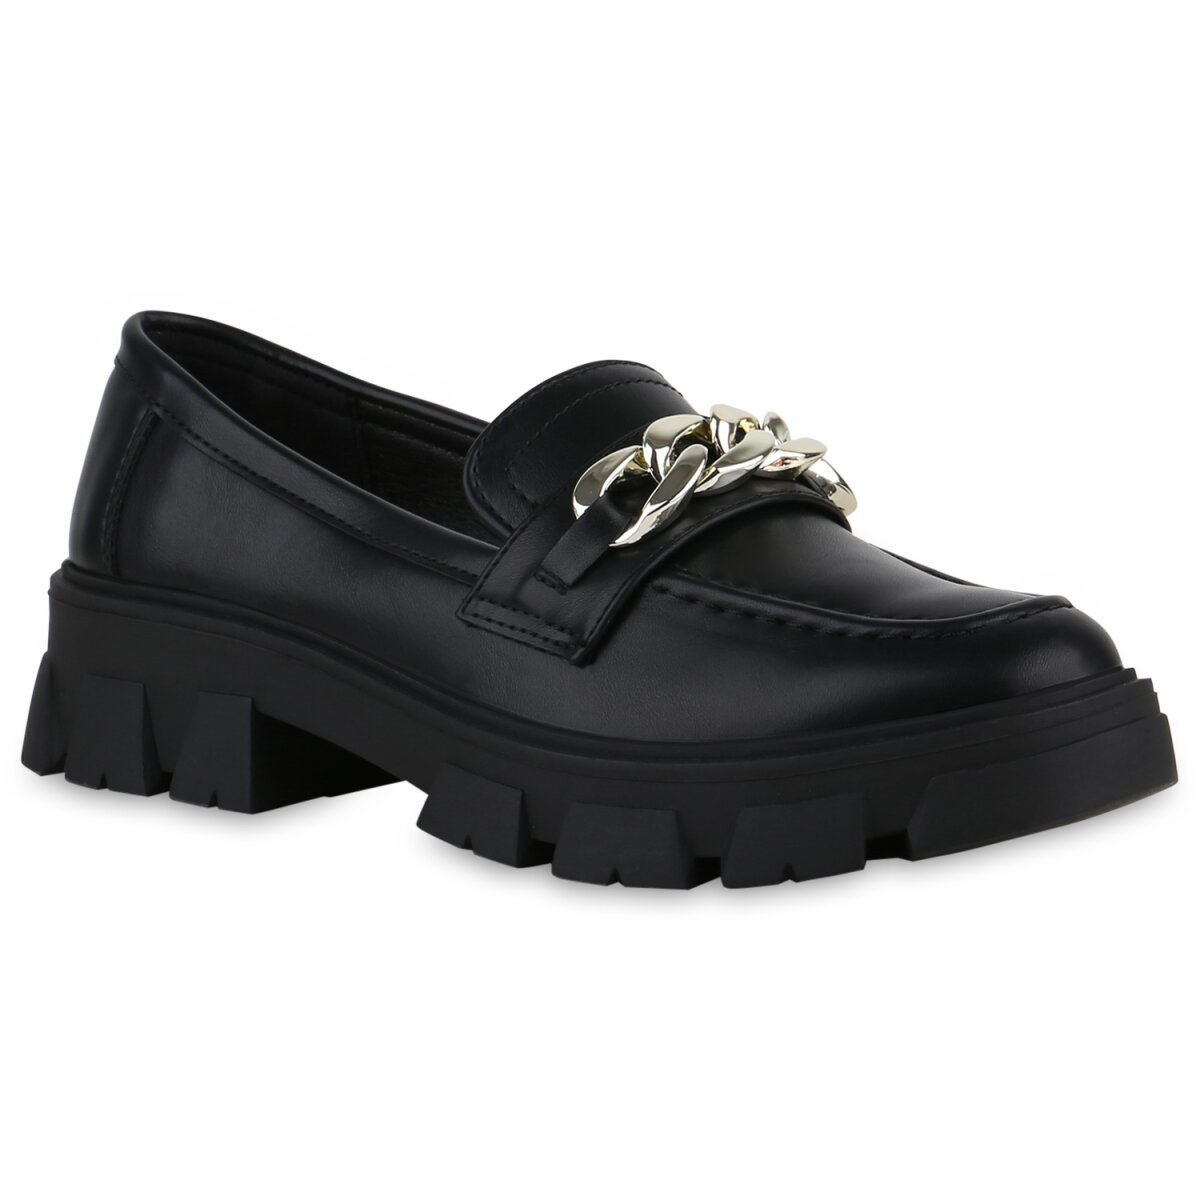 Damen Loafers in Dunkelblau Lack 840656 online kaufen